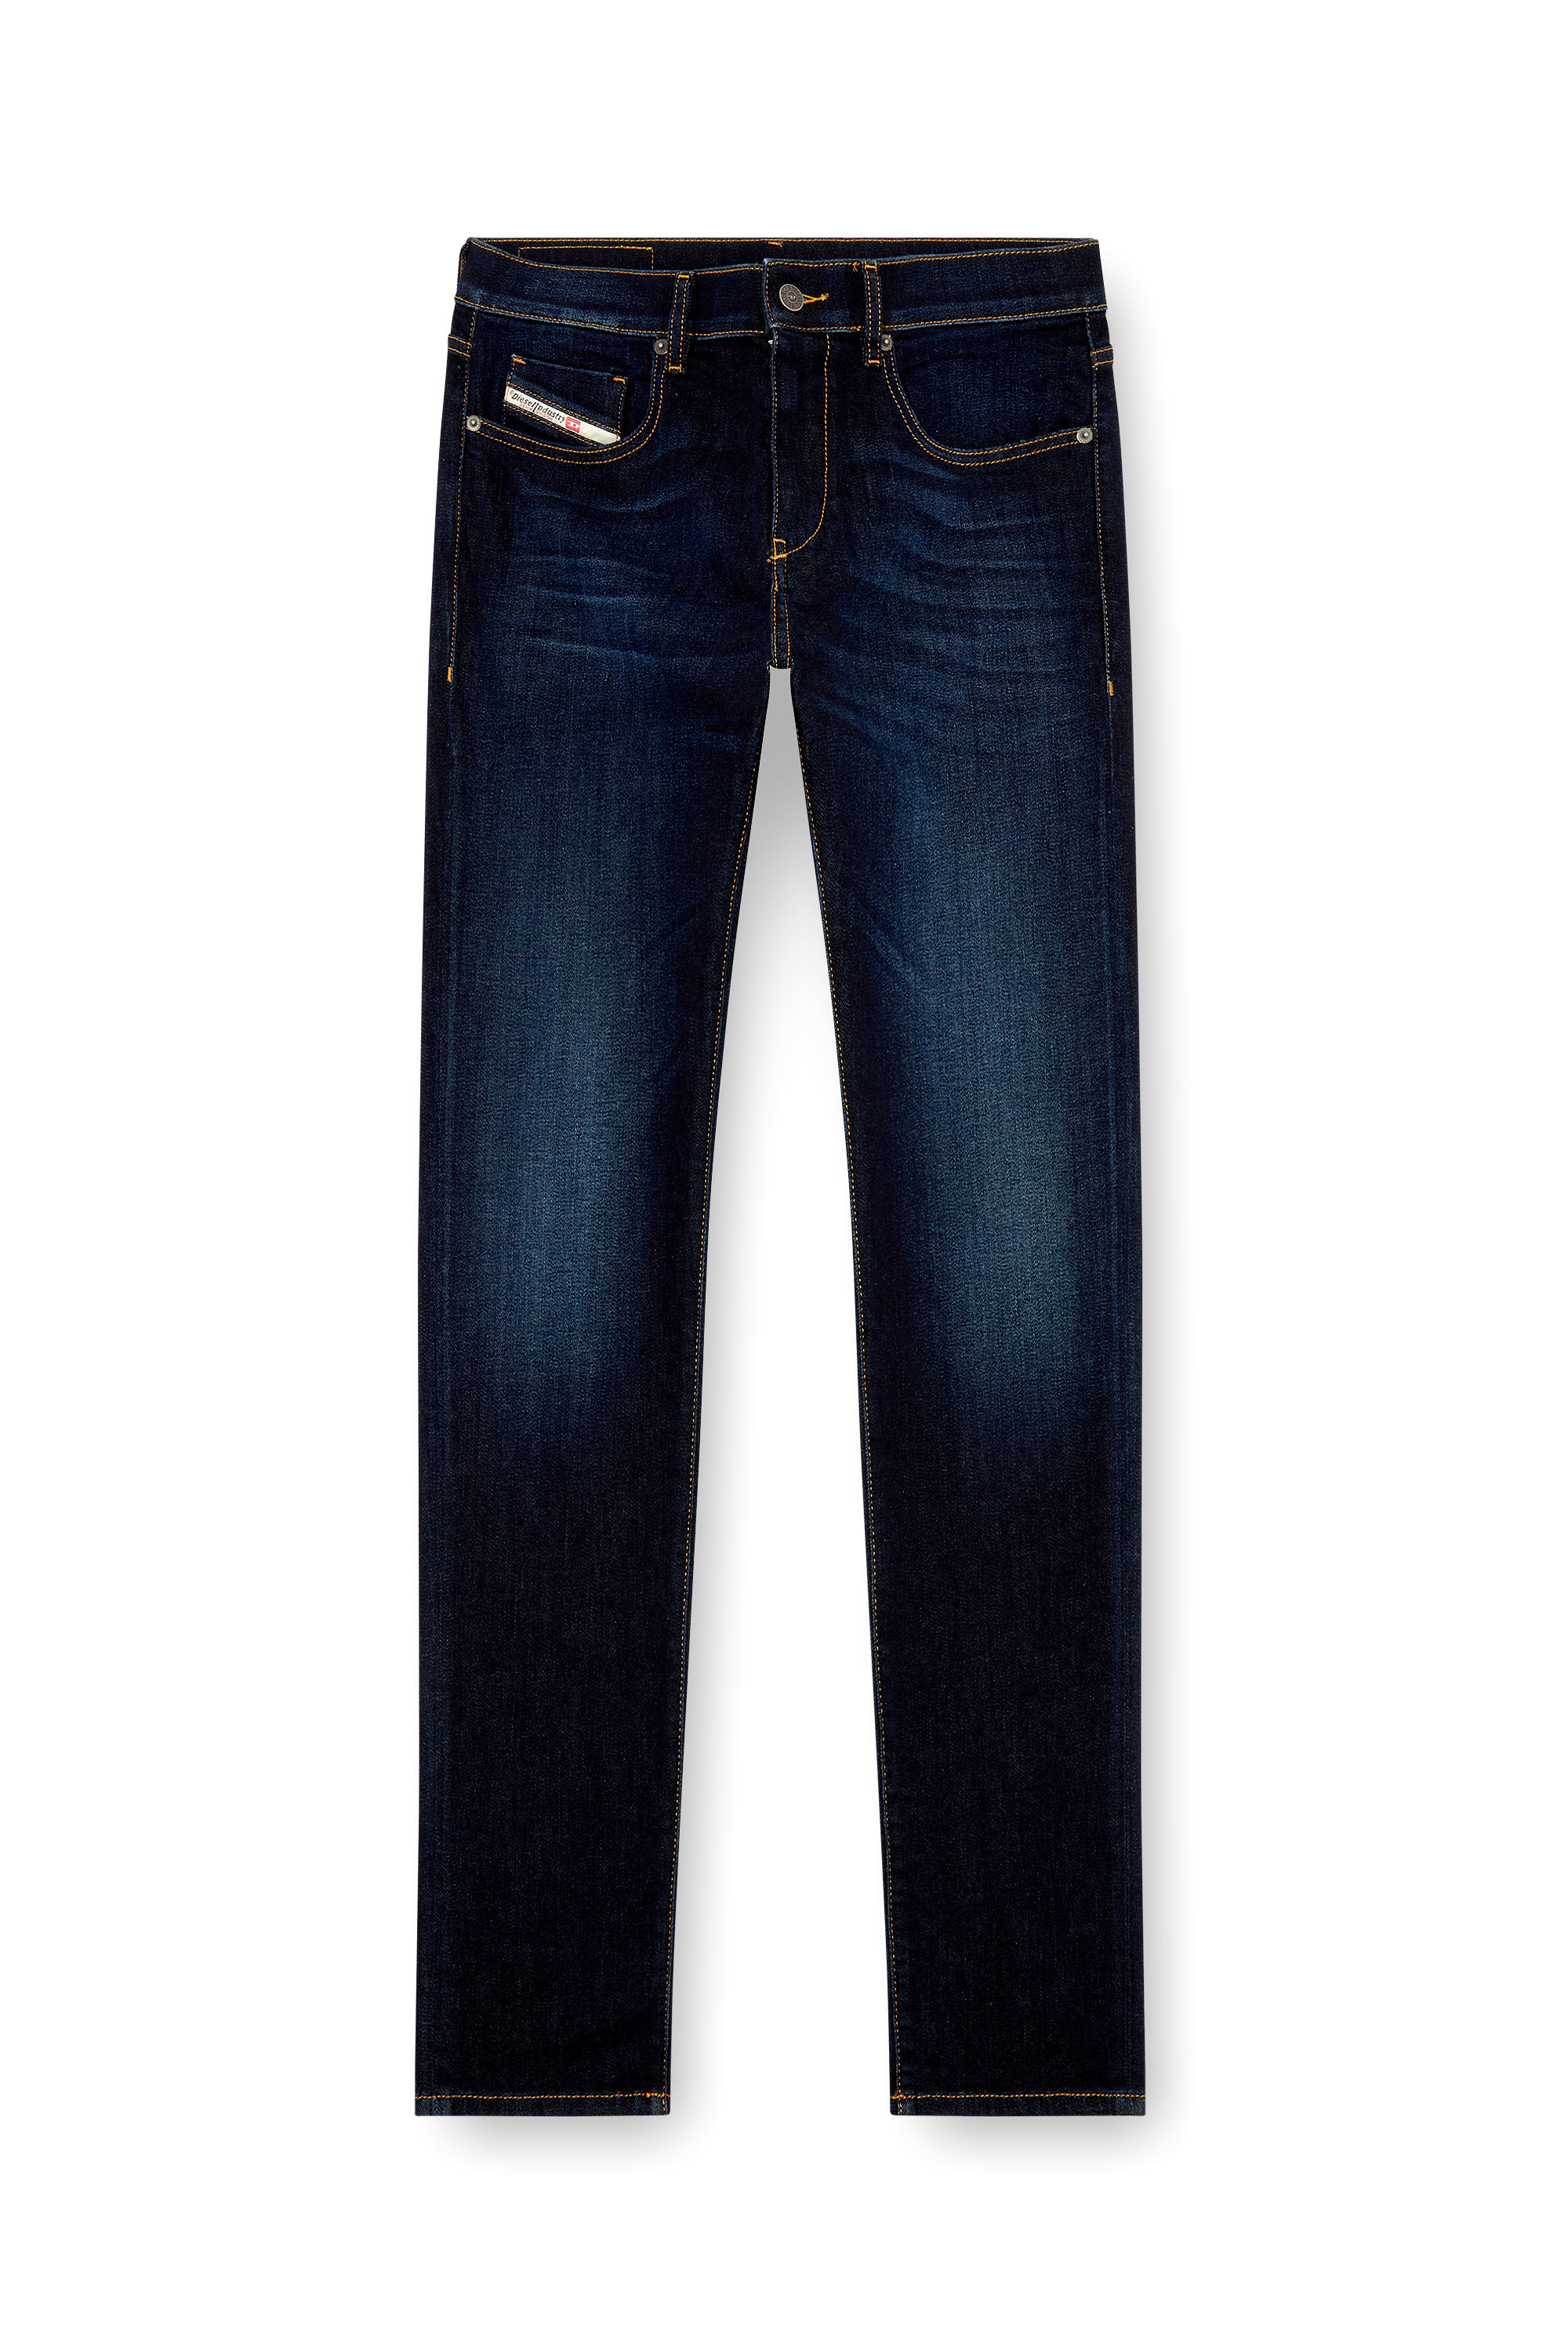 Diesel - Slim Jeans 2019 D-Strukt 009ZS, Hombre Slim Jeans - 2019 D-Strukt in Azul marino - Image 5